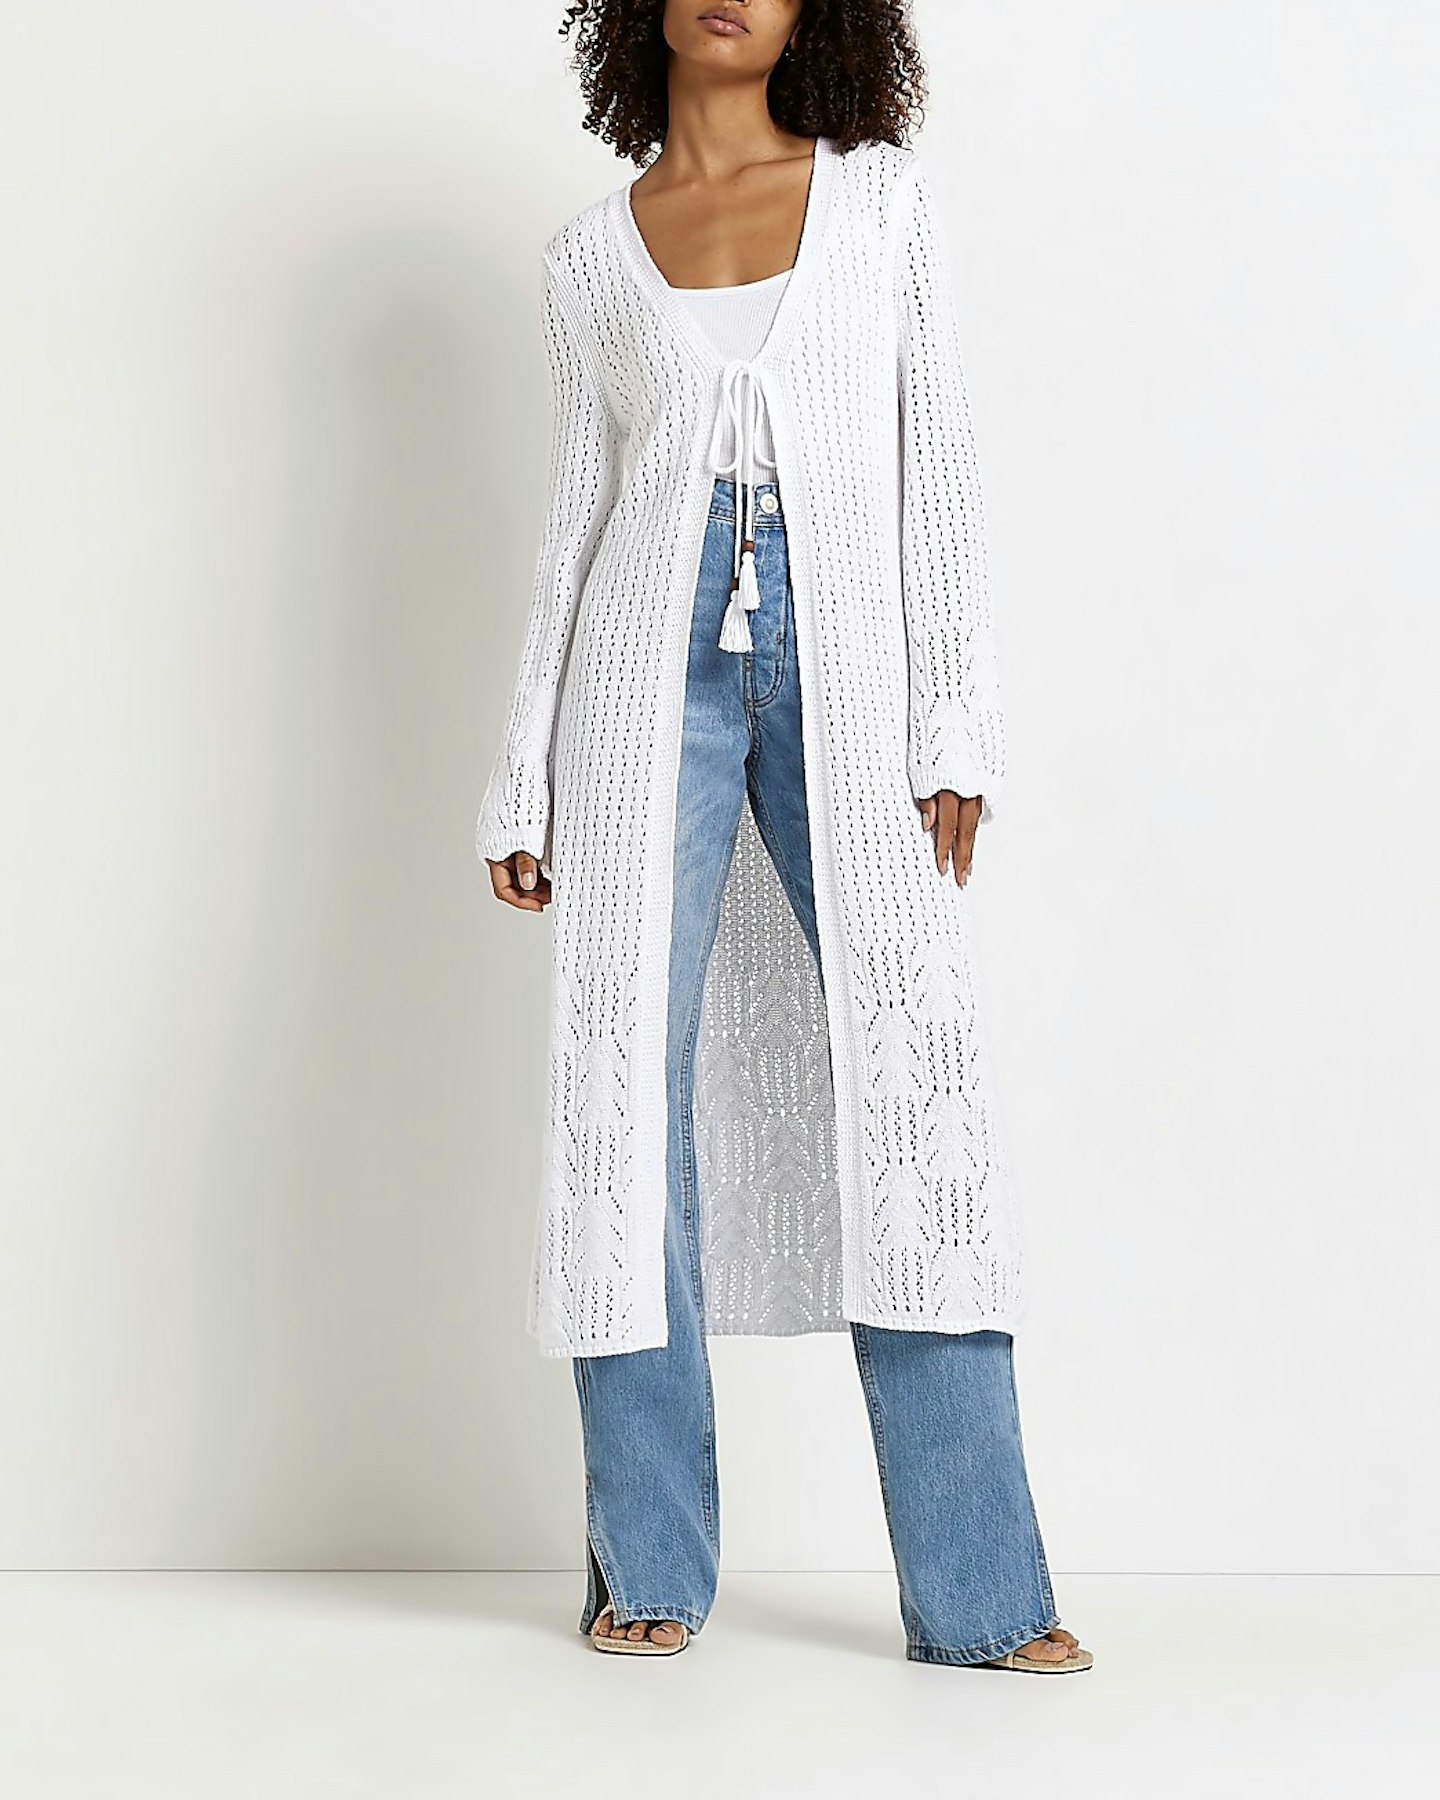 river island best buys White Crochet Longline Cardigan Top, £45